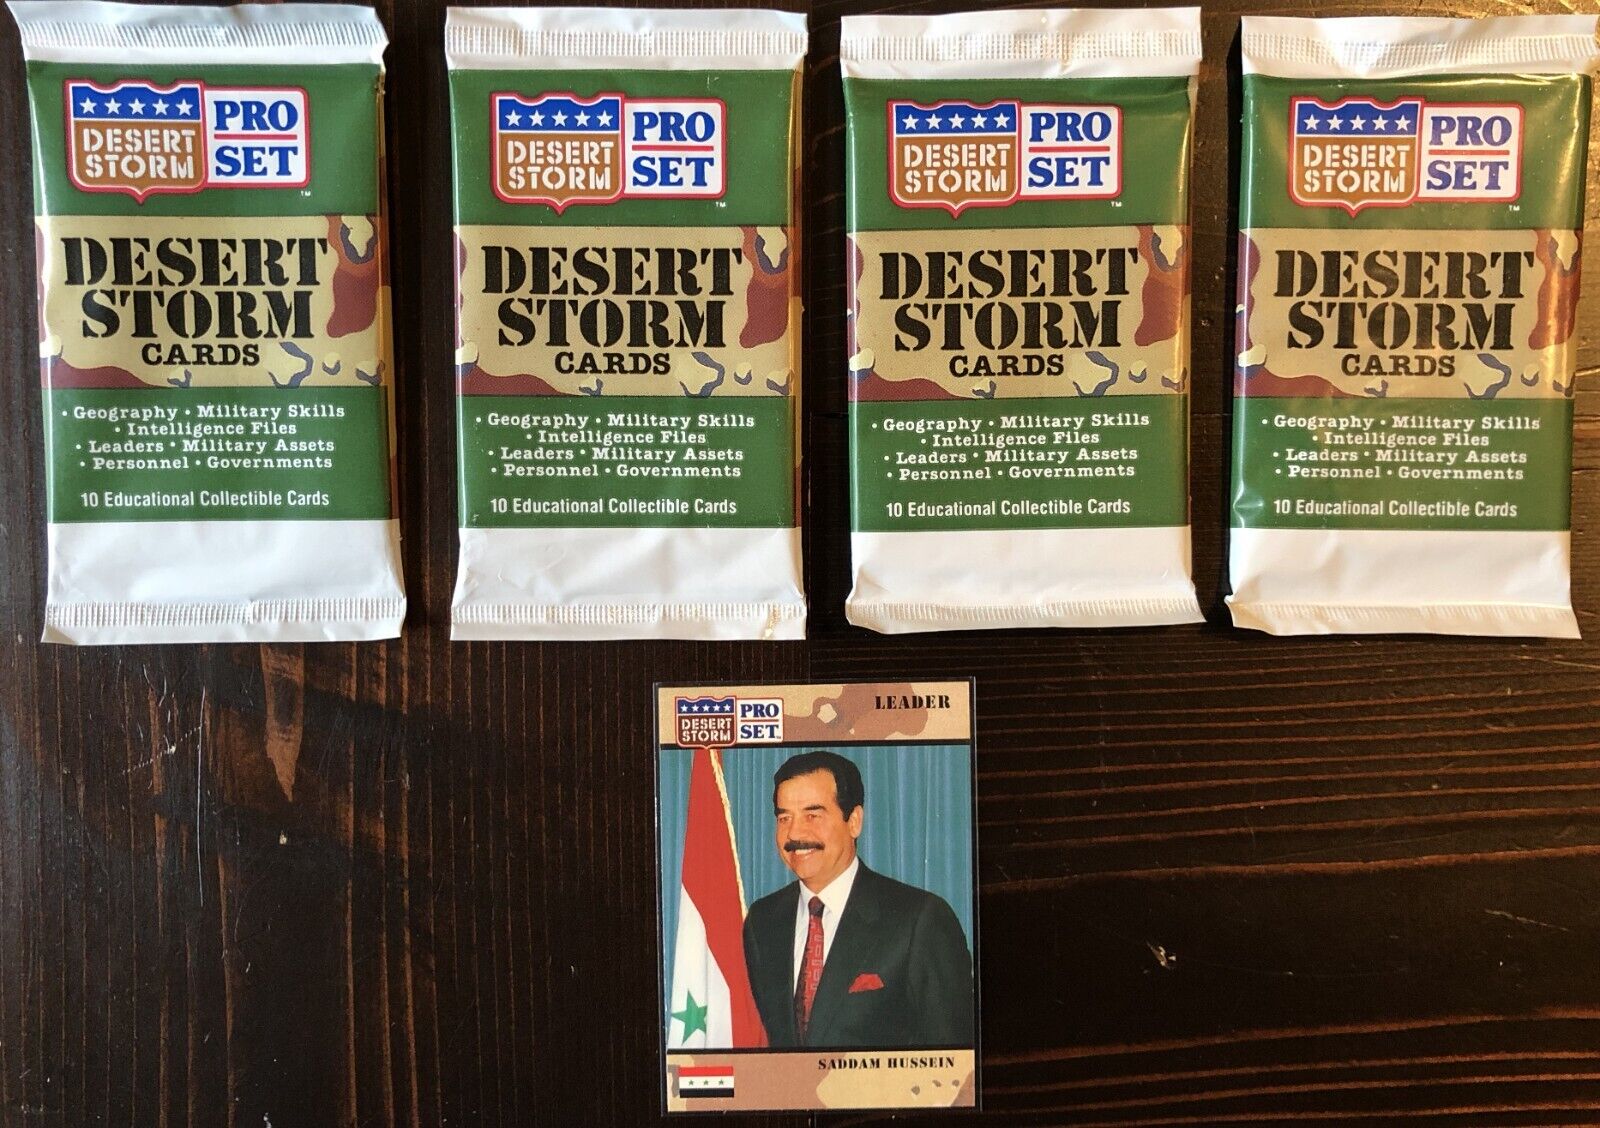 1991 Pro Set Desert Storm - Saddam Hussein Rookie Card (#69) + 4 Unopened Packs